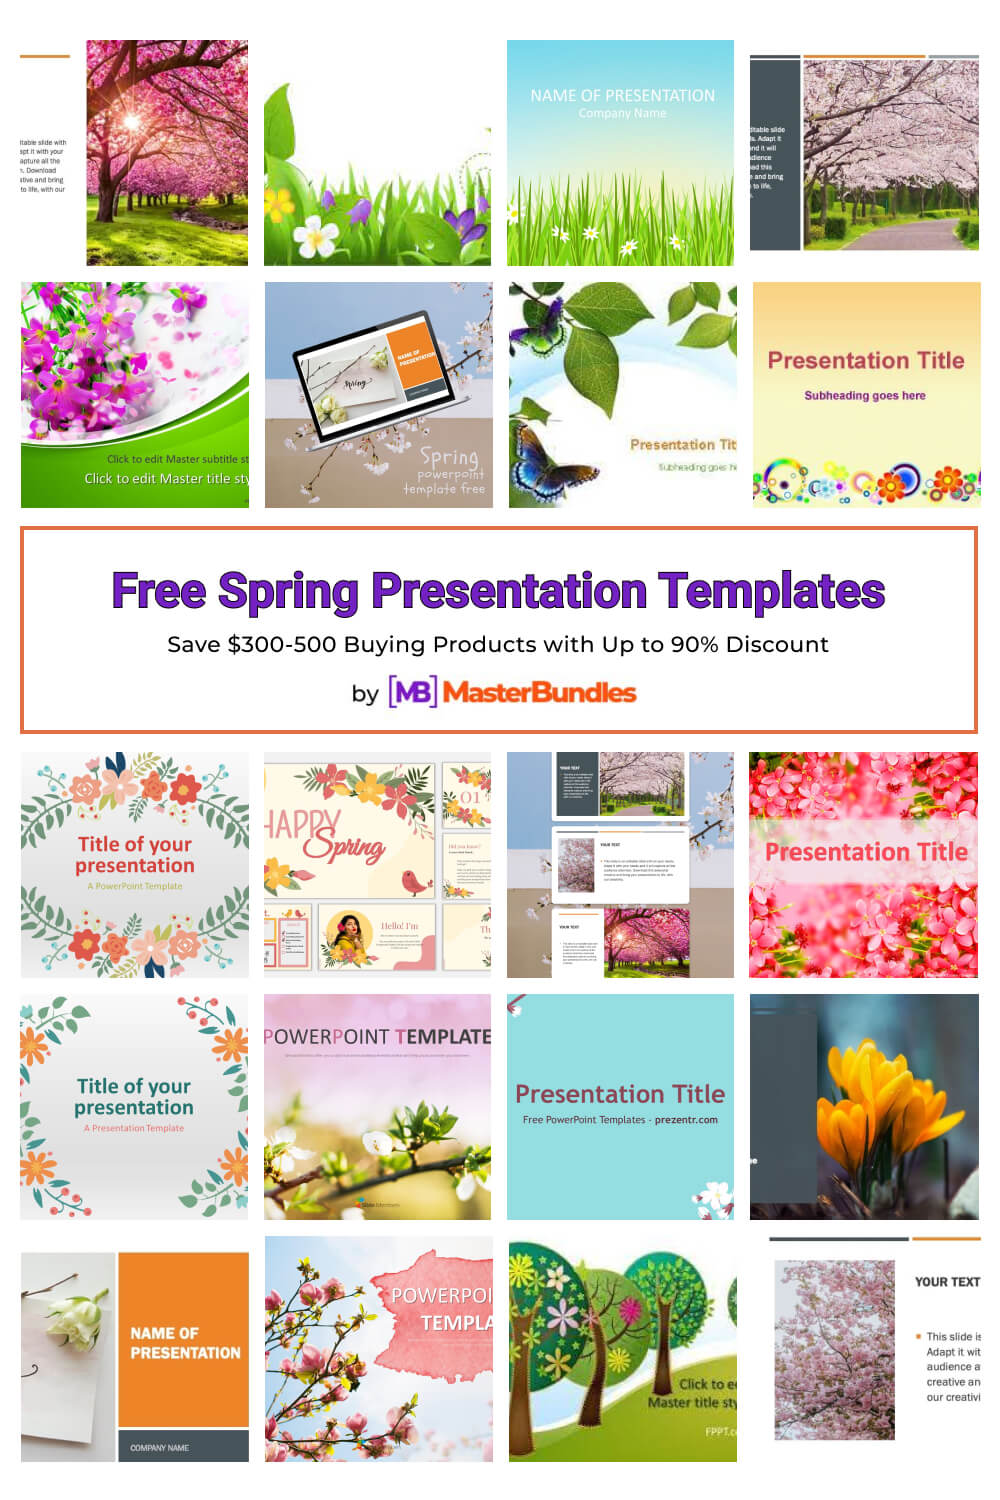 free spring presentation templates pinterest image.